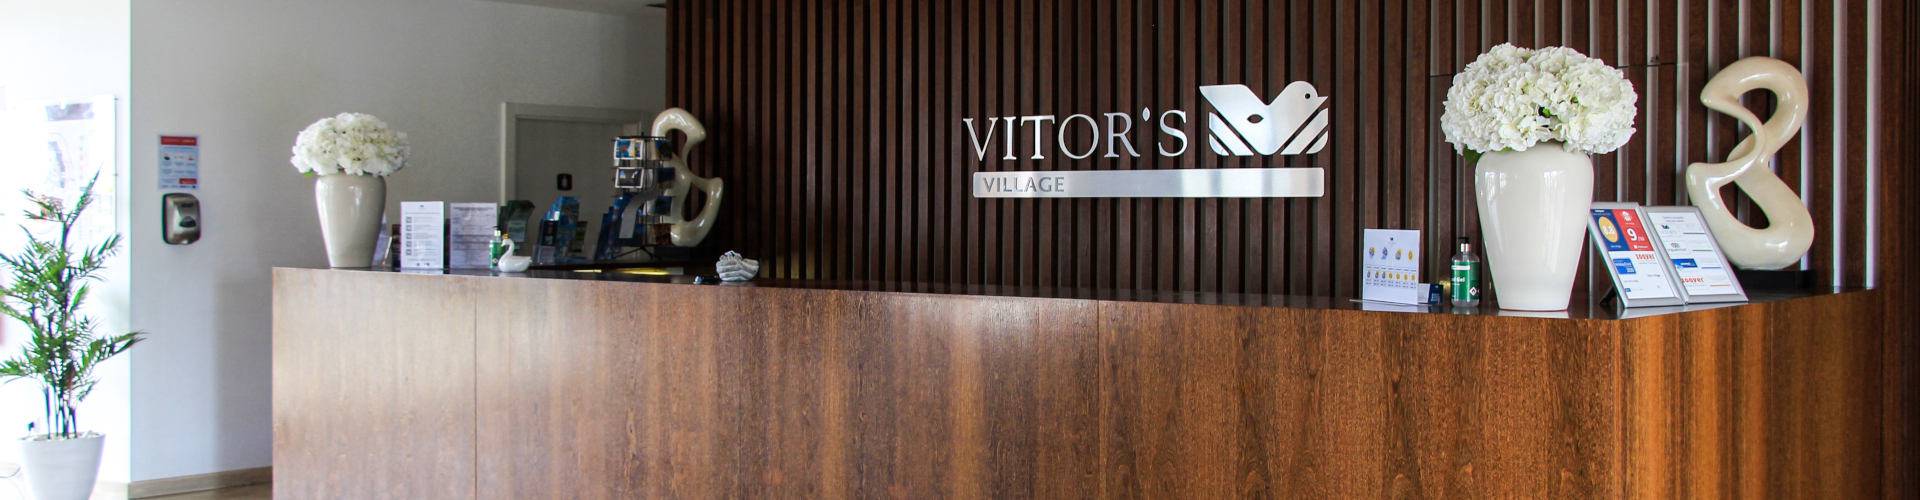 Vitors hotels -  - Hotel reviews